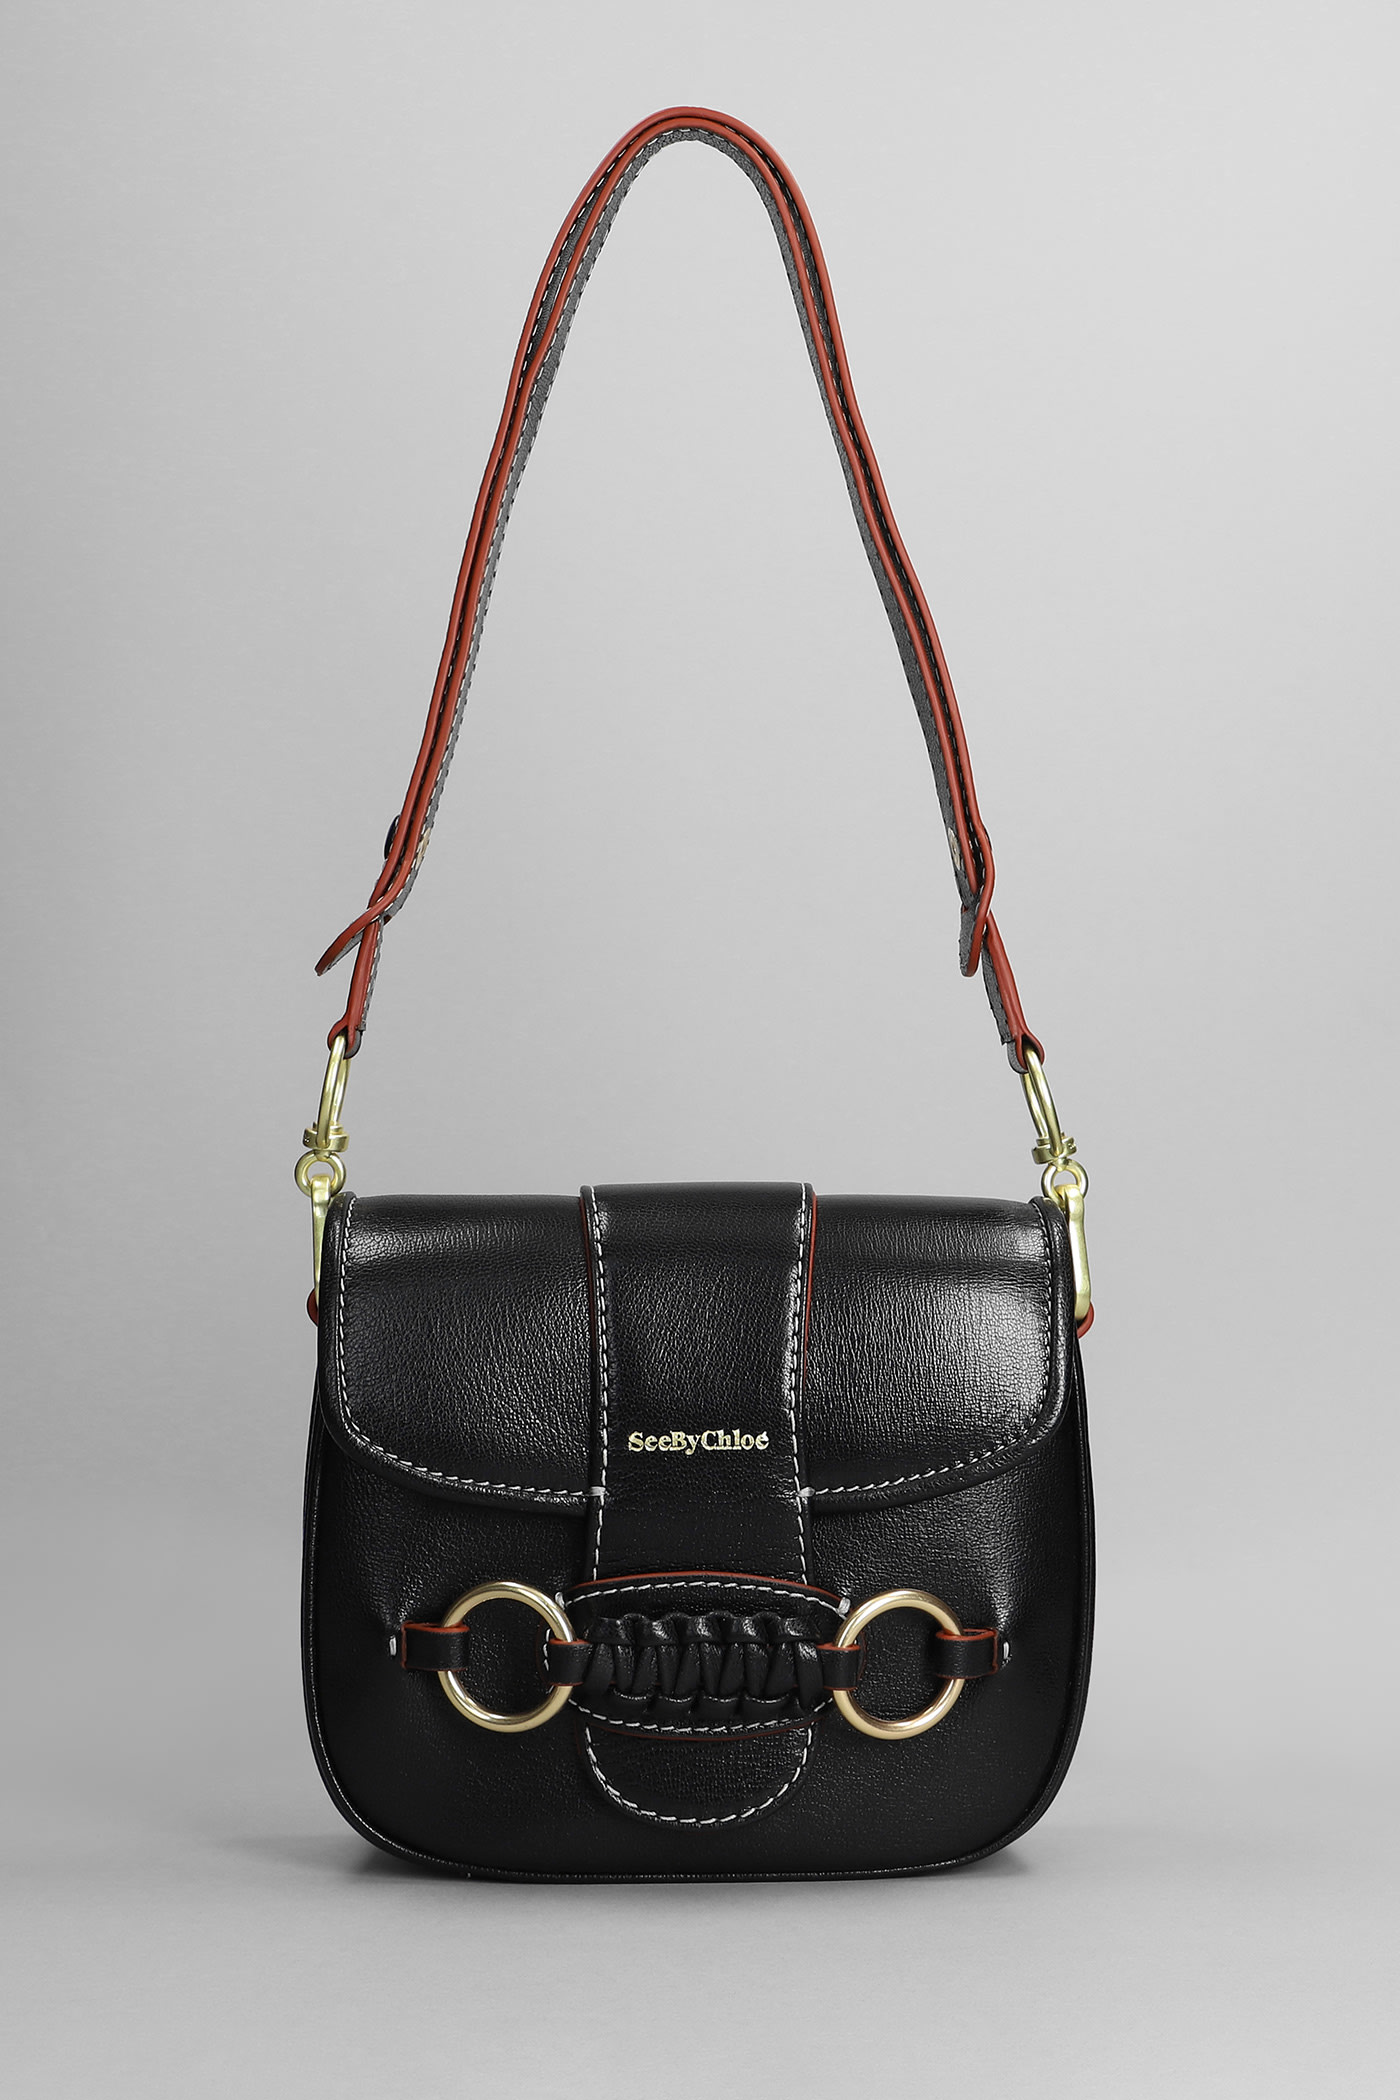 See by Chloé Saddie Shoulder Bag In Black Leather